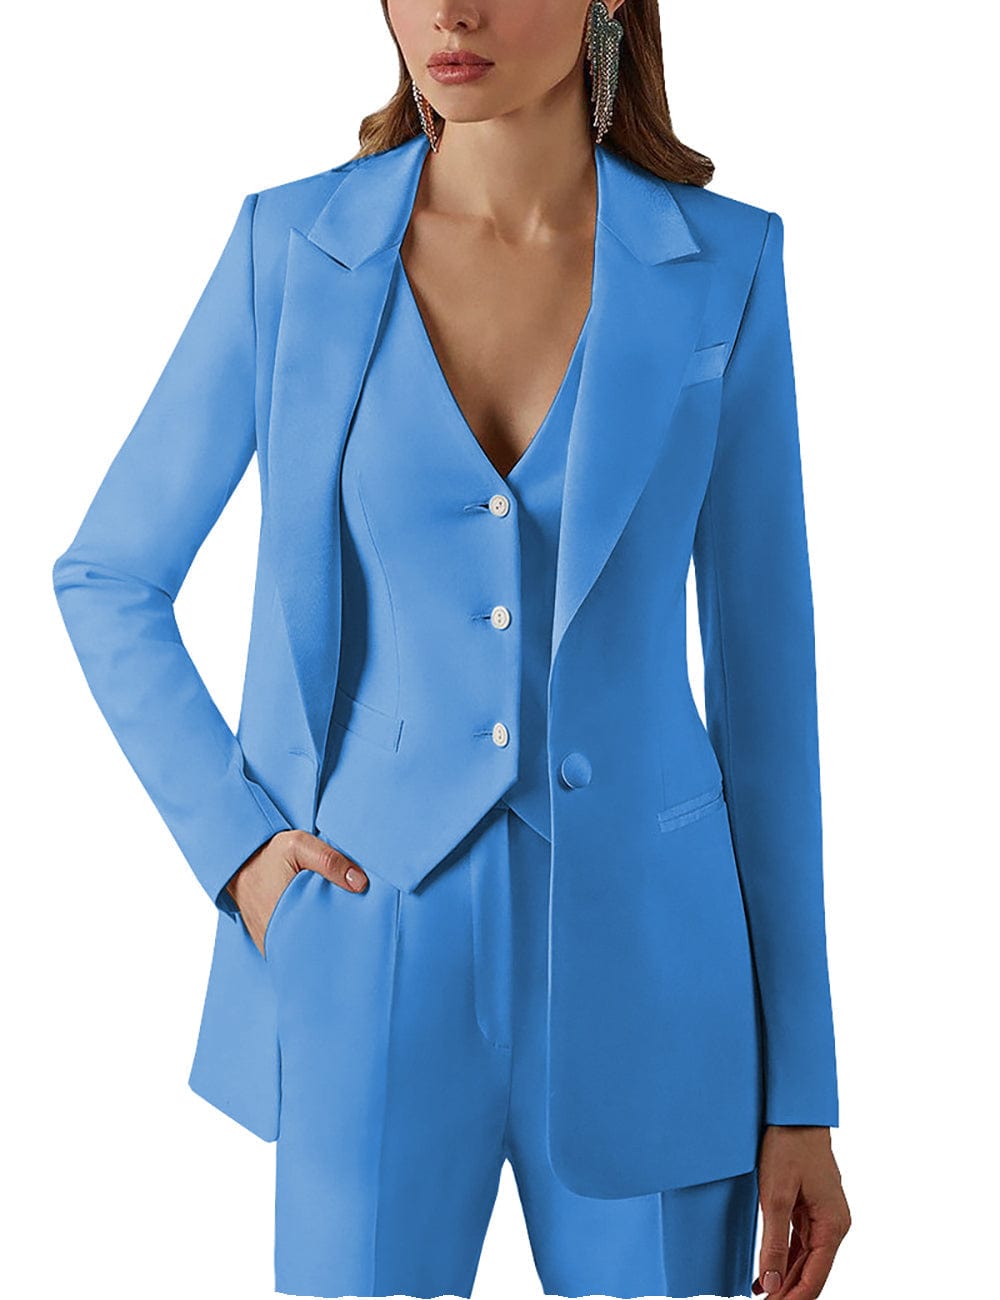 Summer Short Sleeve Blazer Jacket Women Summer Business Formal Elegant Suit  Coat | eBay